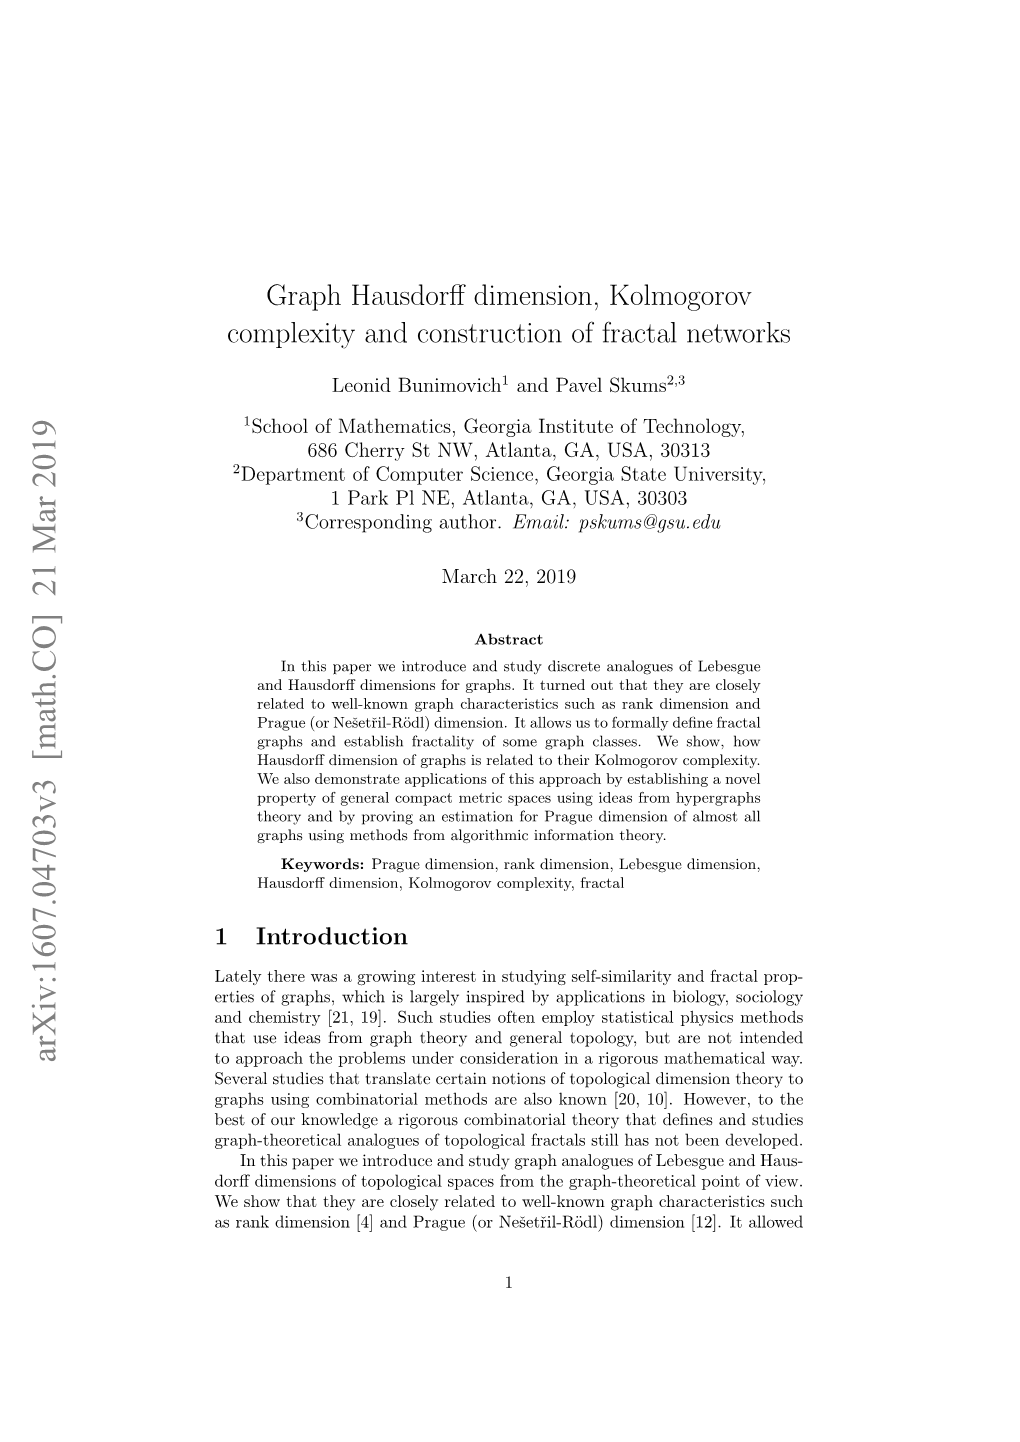 Graph Hausdorff Dimension, Kolmogorov Complexity And